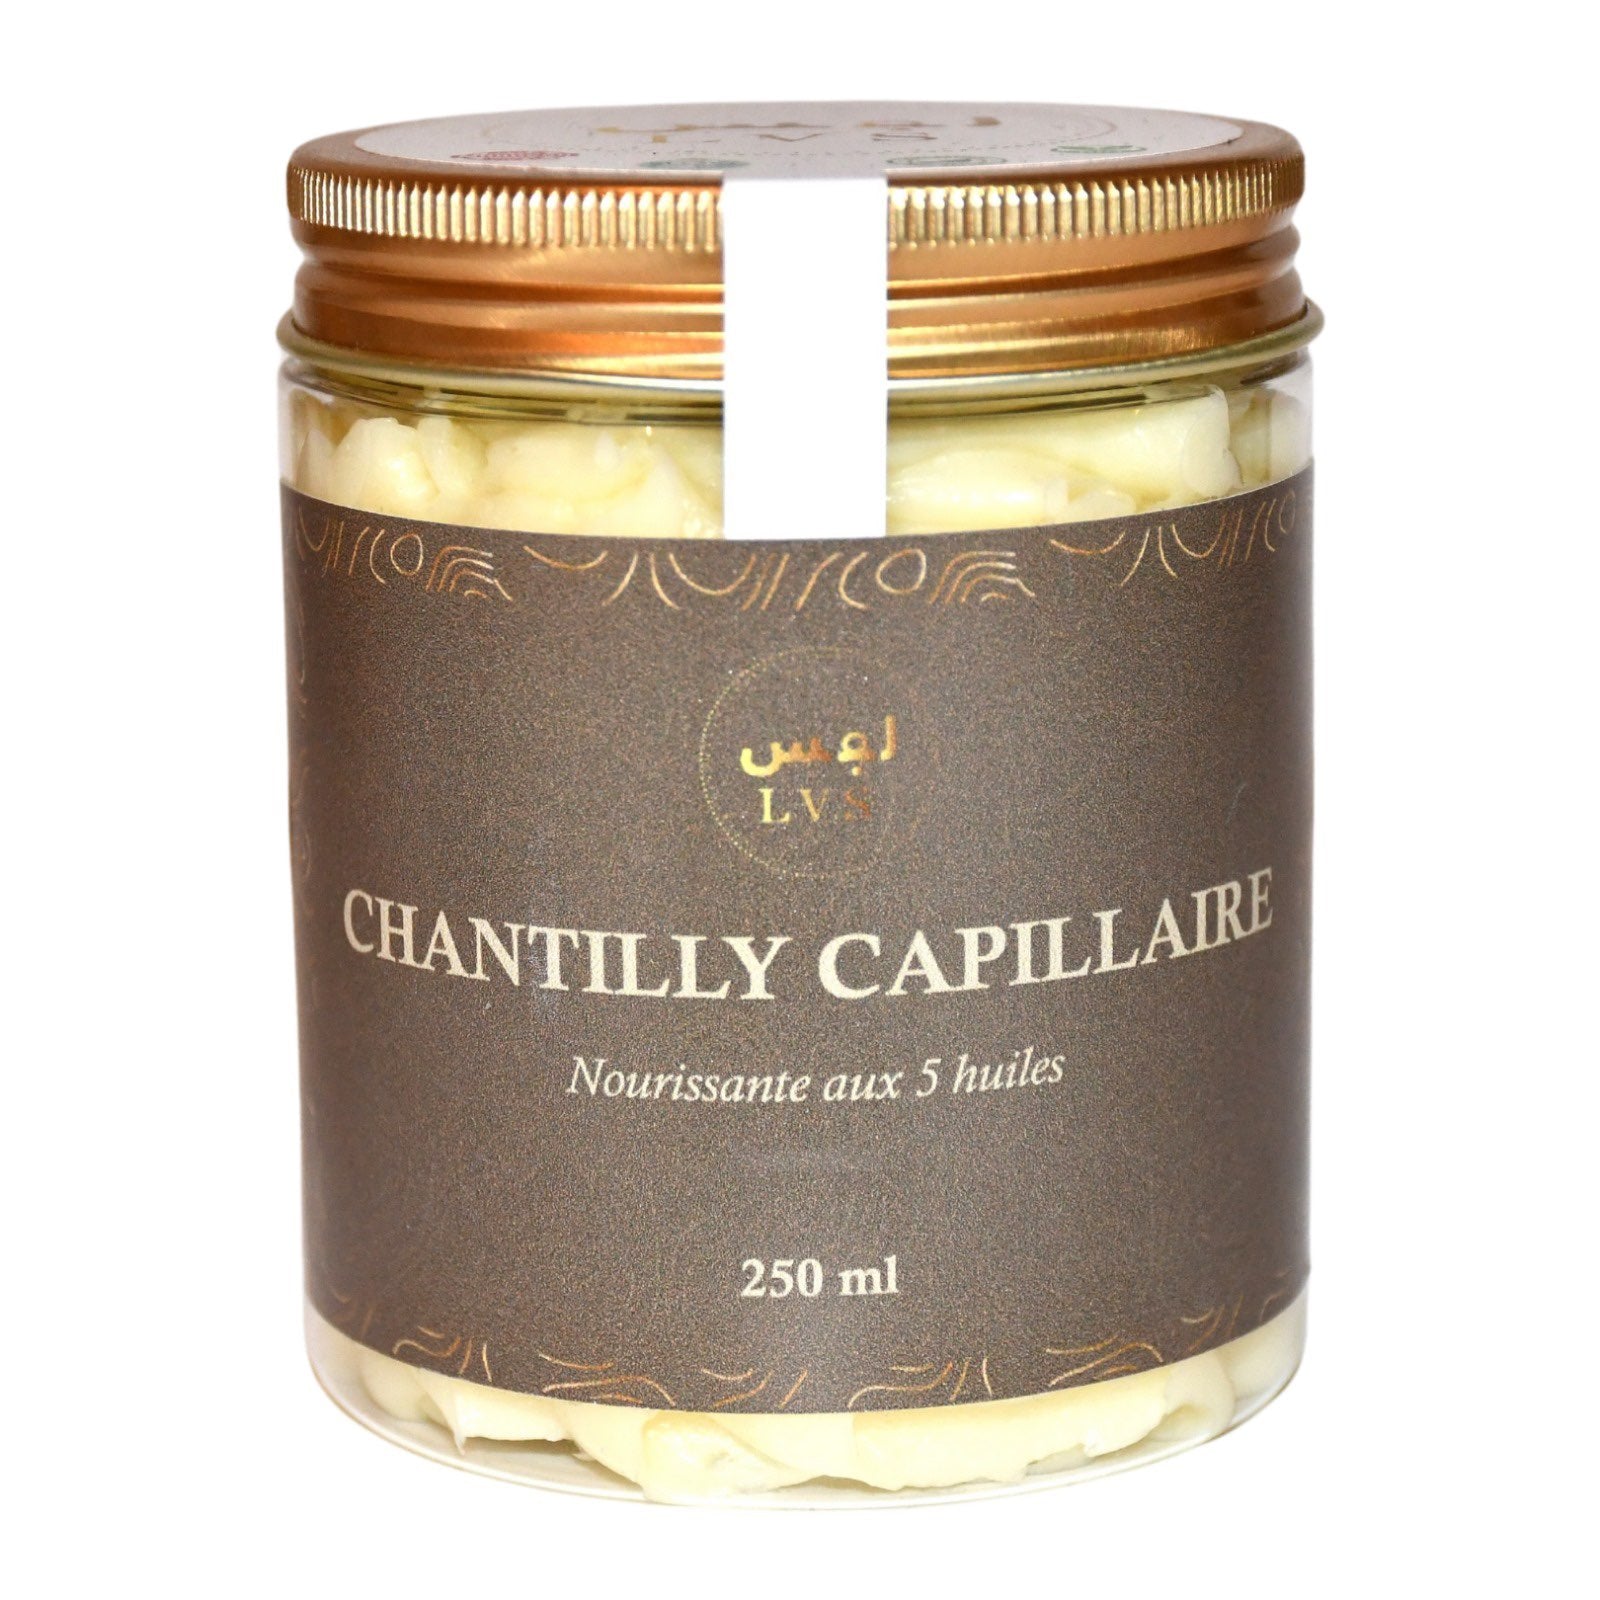 Chantilly capillaire nourrissante